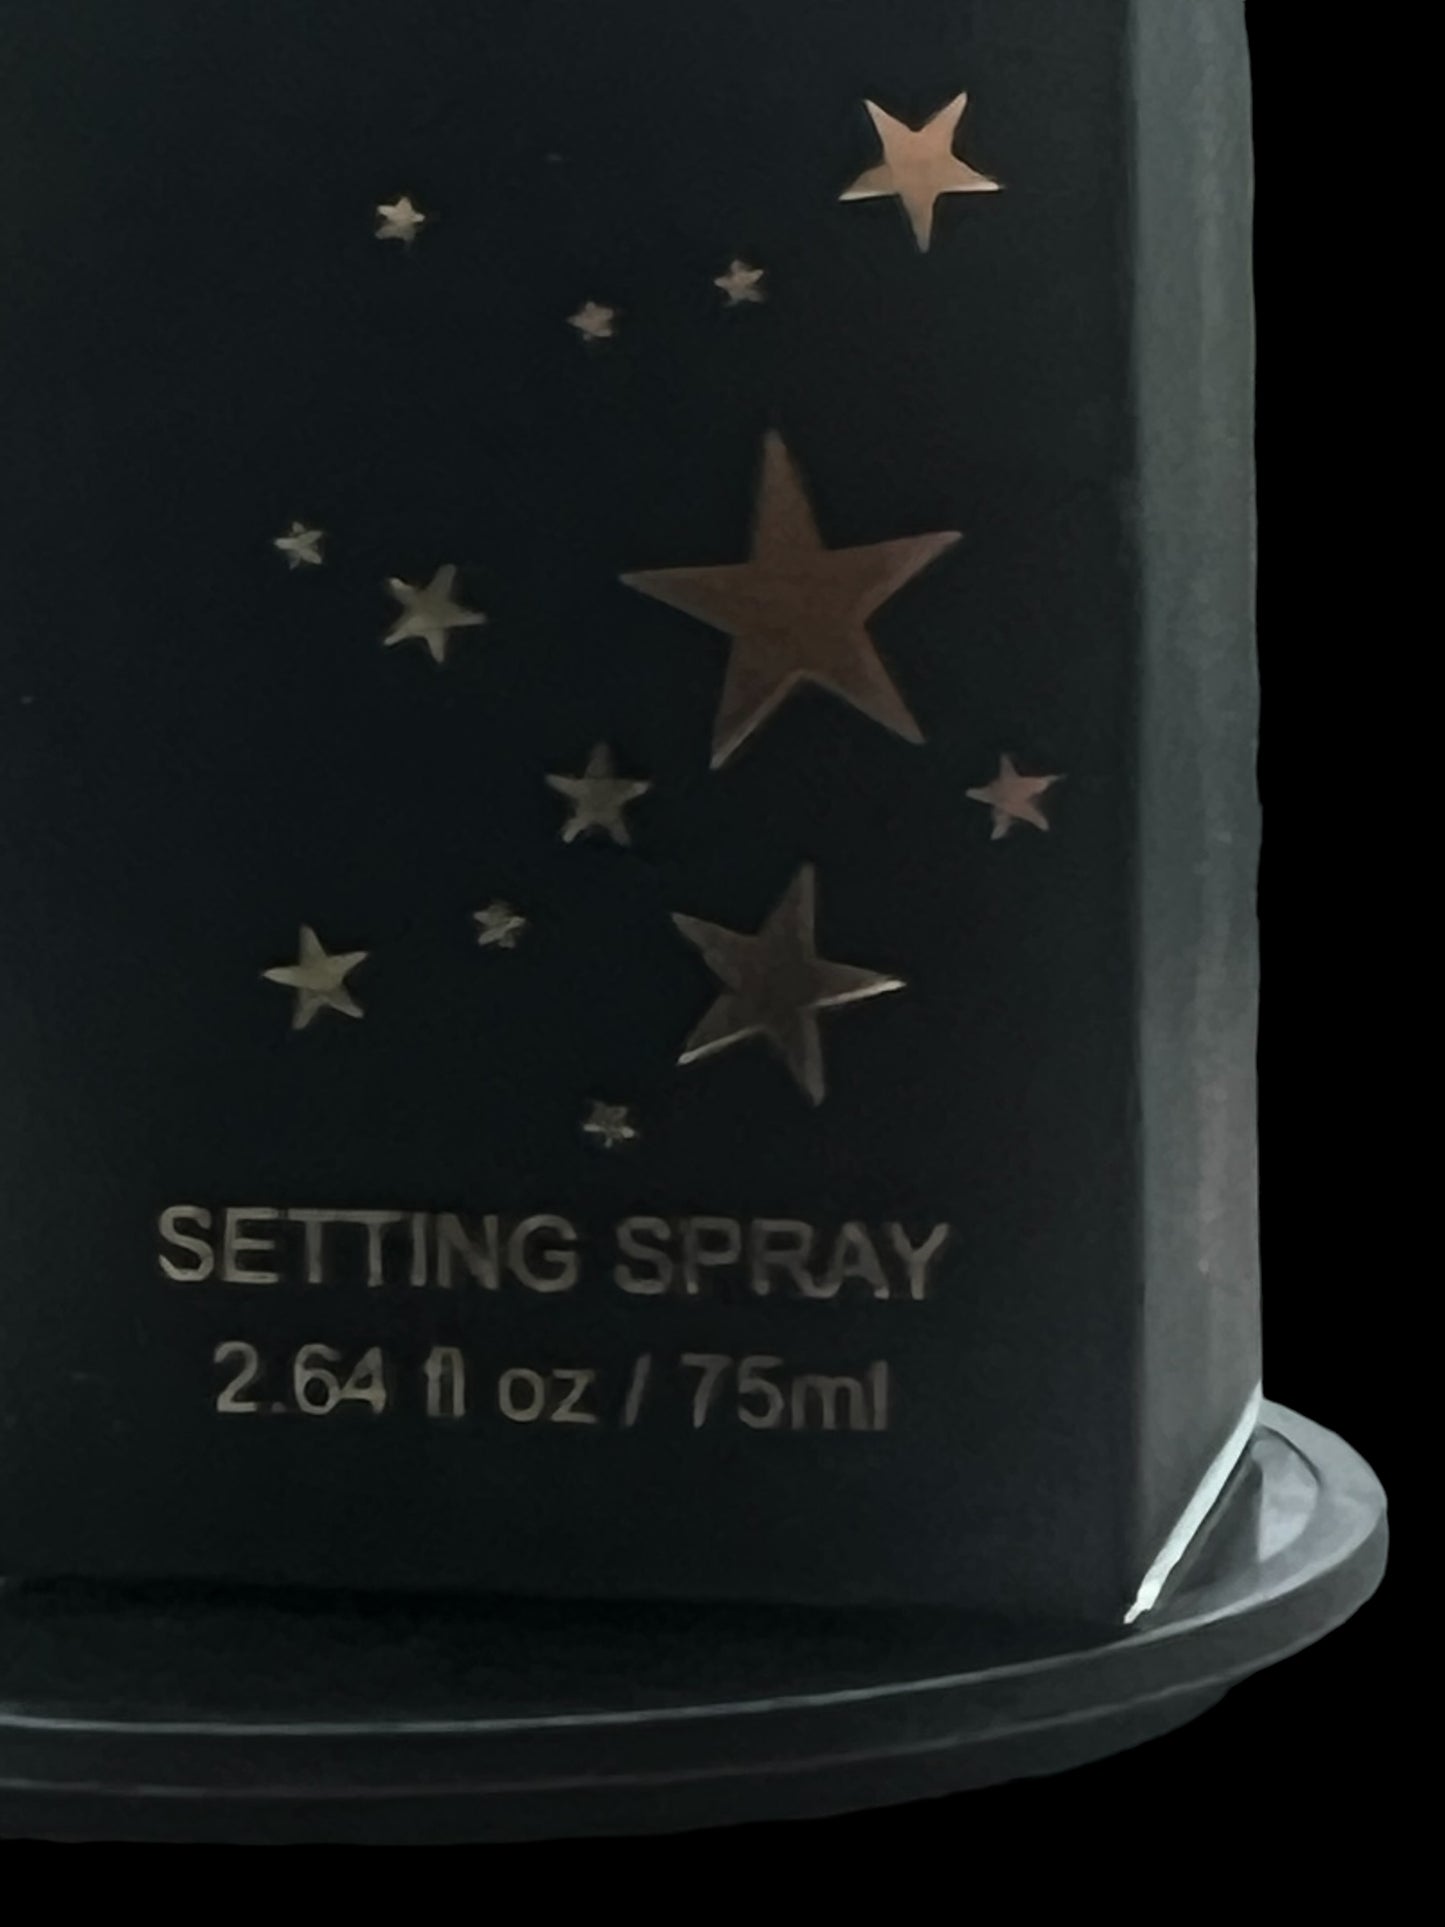 Saint Luxe Setting Spray